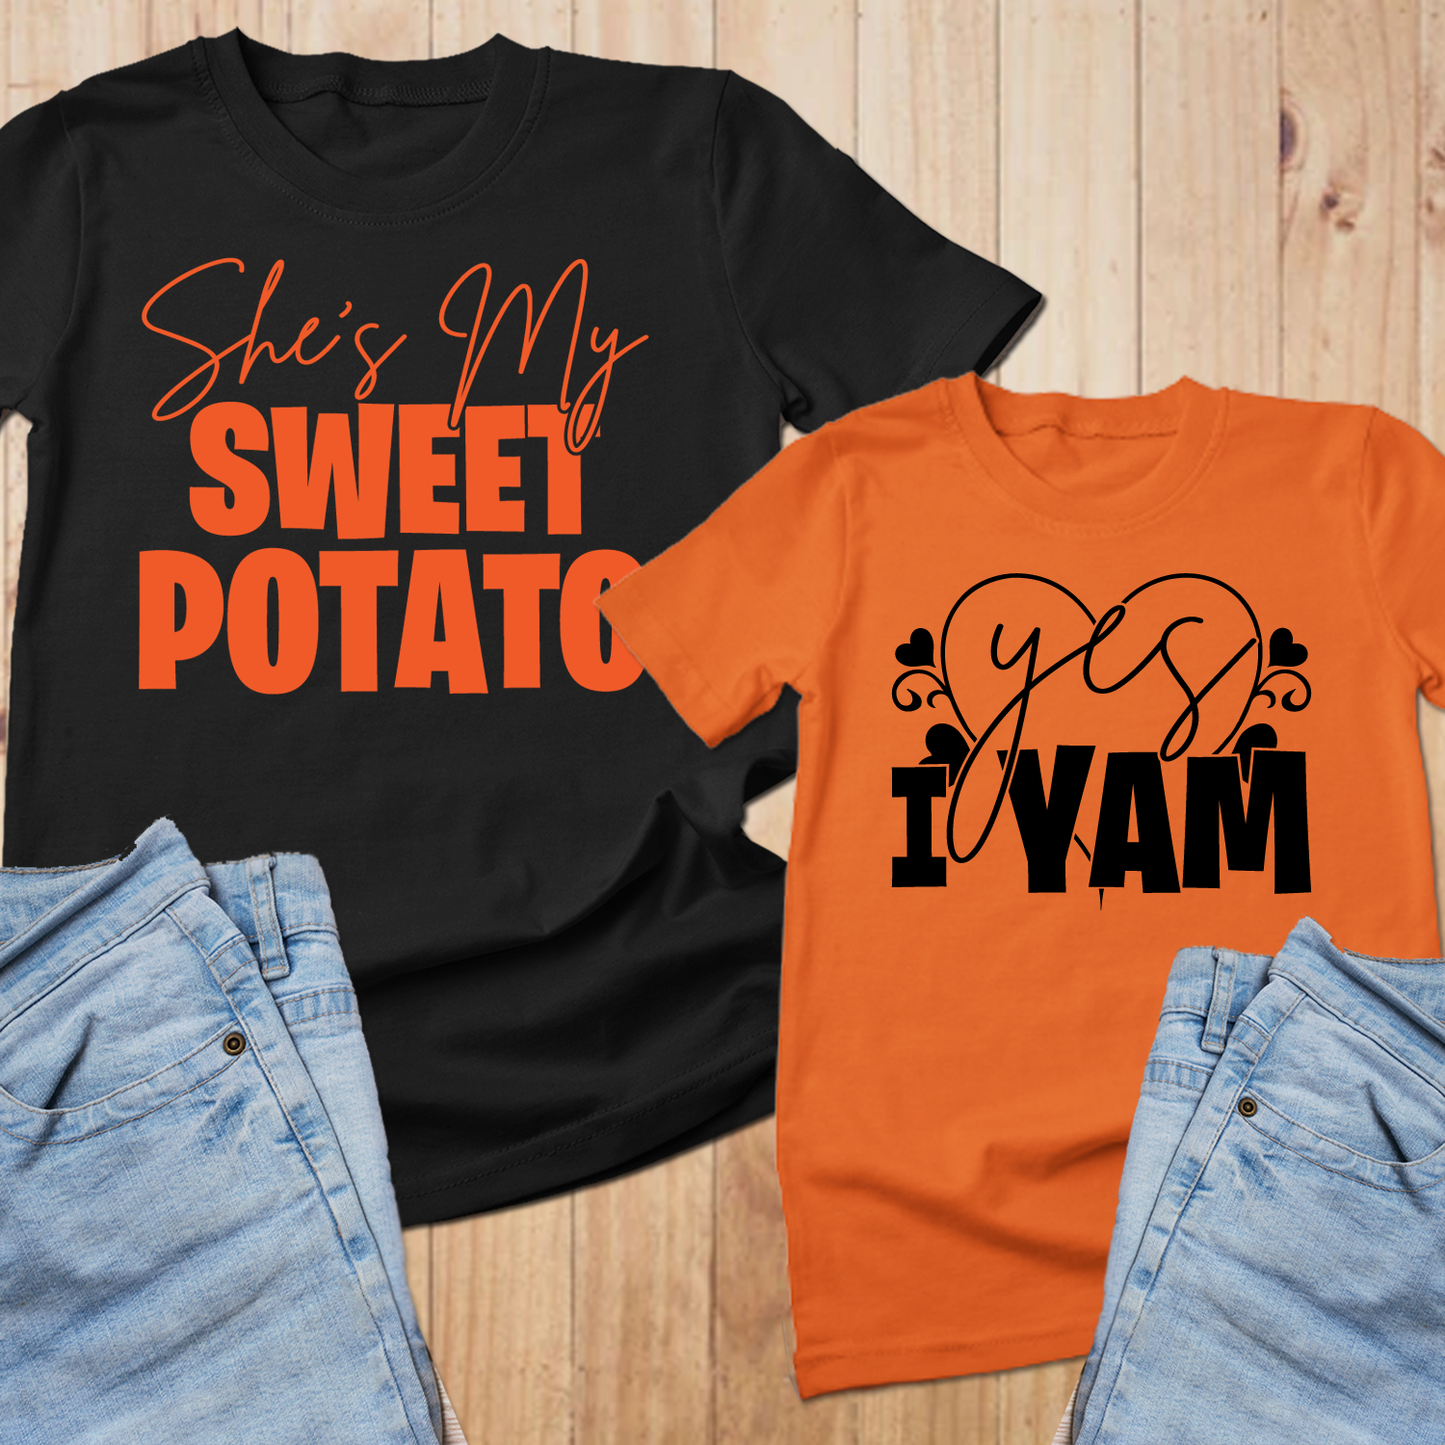 He's my sweet potato I yam shirts, thanksgiving shirts for couples, couple thanksgiving shirt, thanksgiving couple shirts - Wilson Design Group